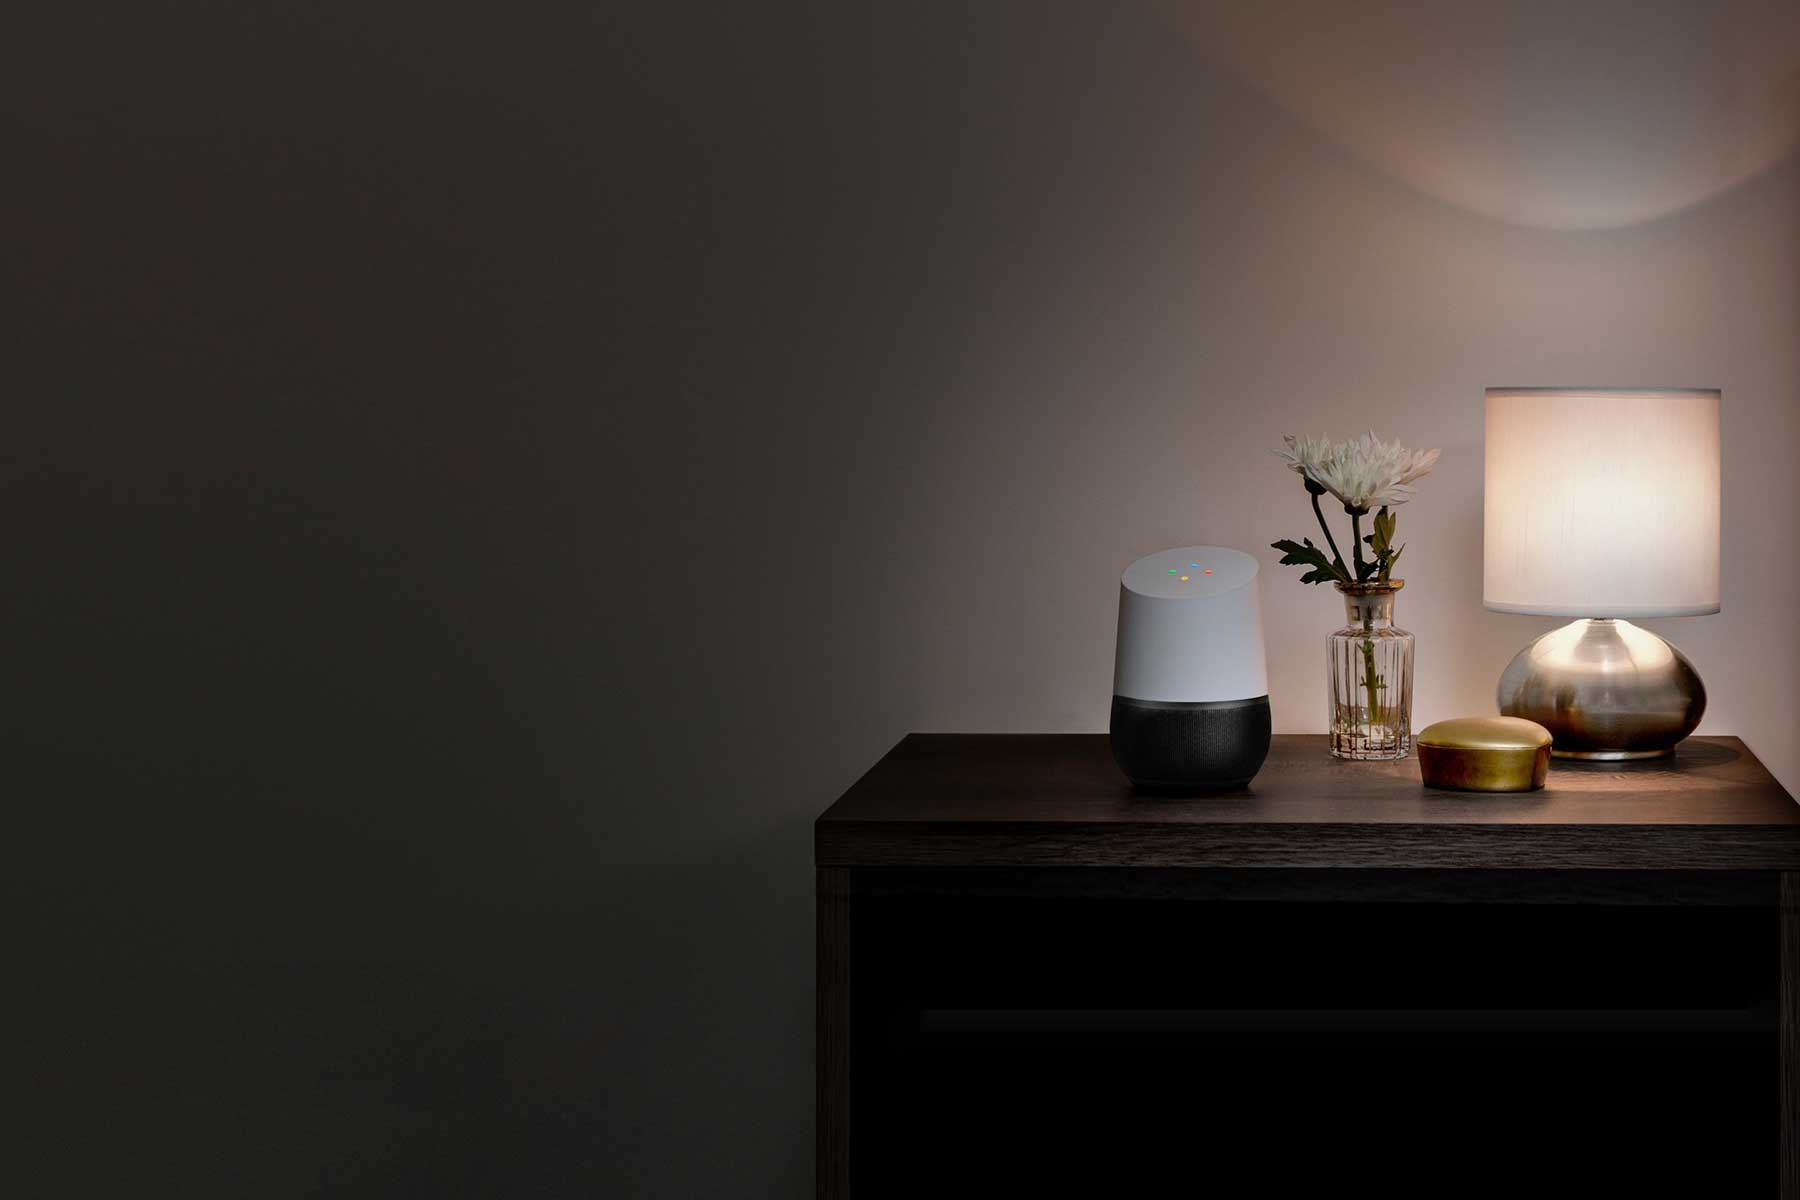 Google Home - a device to take on Amazon's Echo?